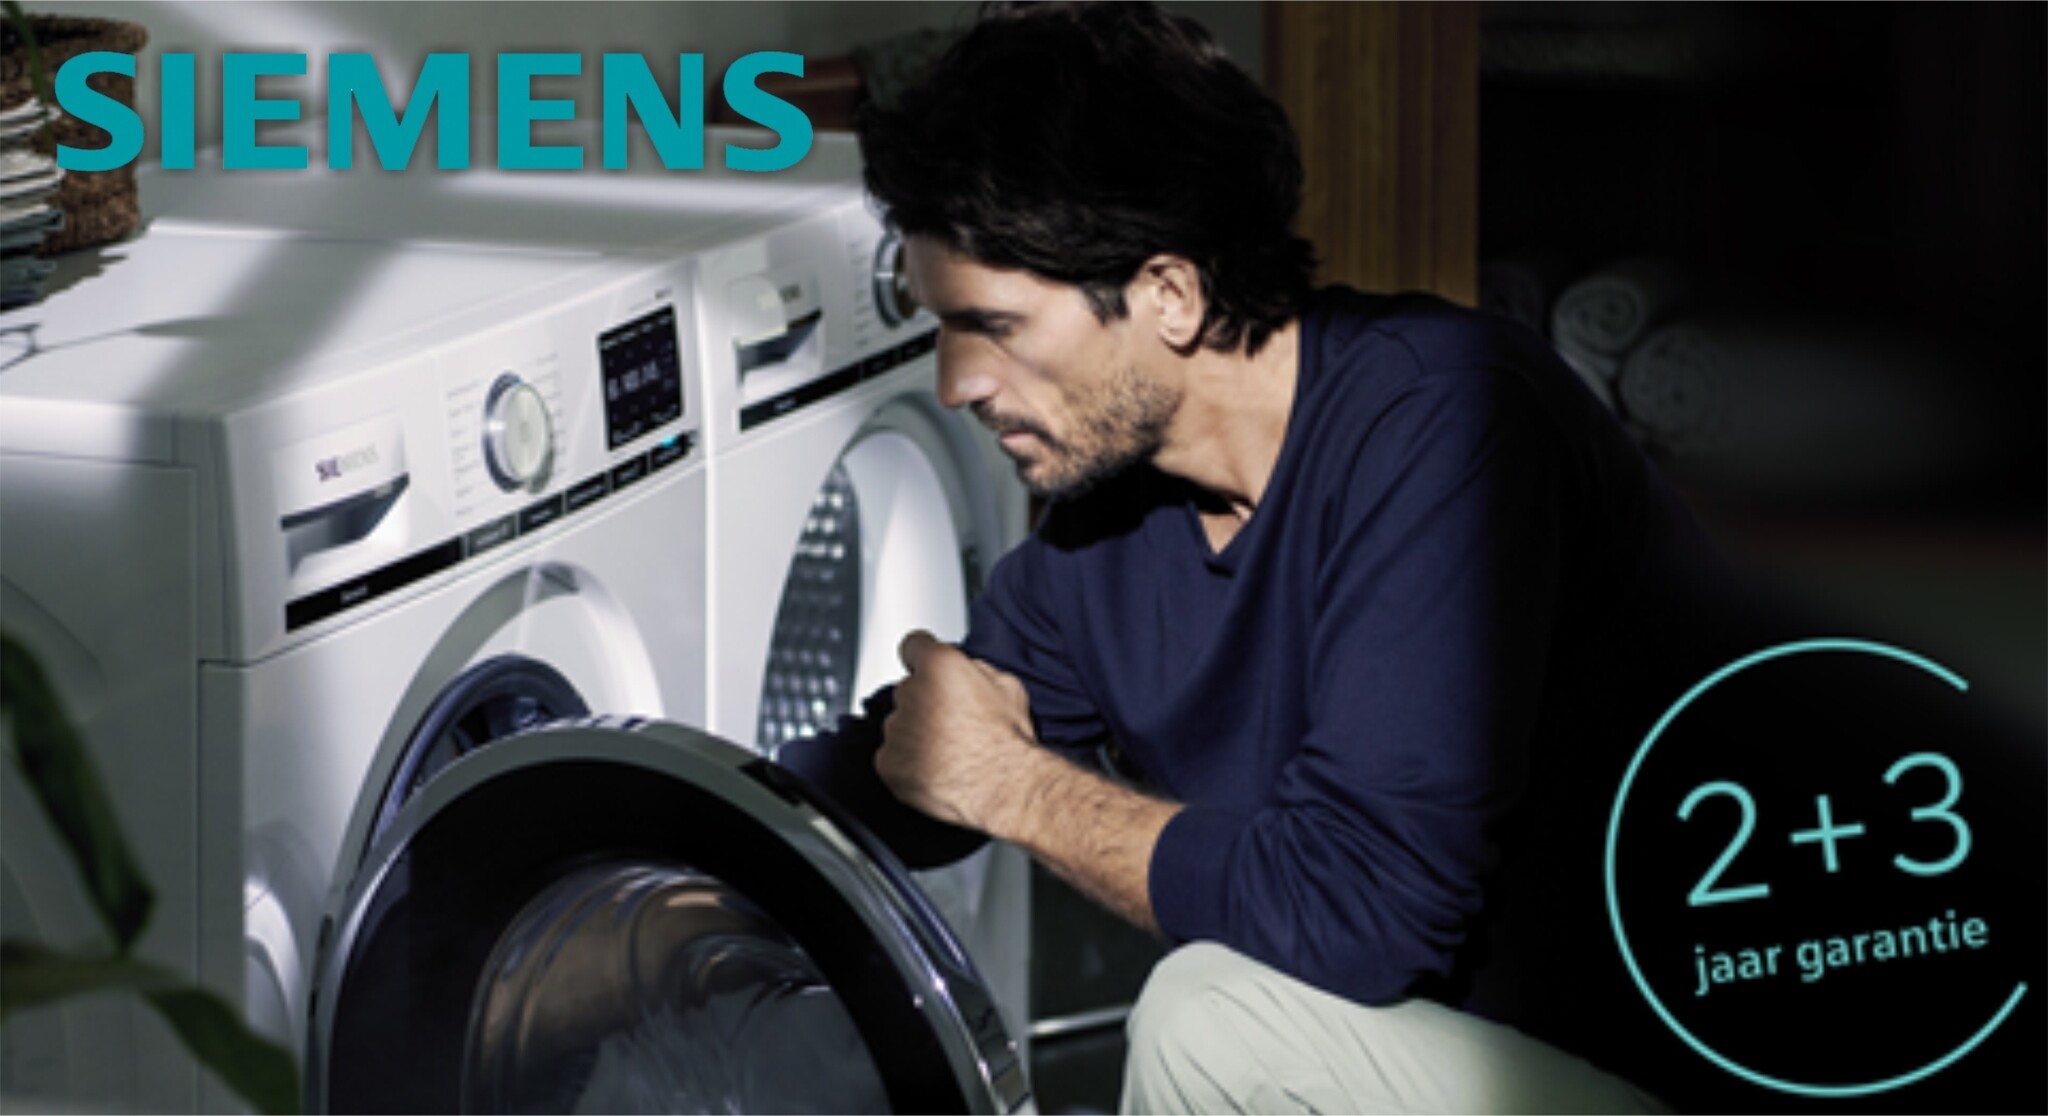 Siemens | ExtraKlasse - Nu 2+3 jaar garantie!